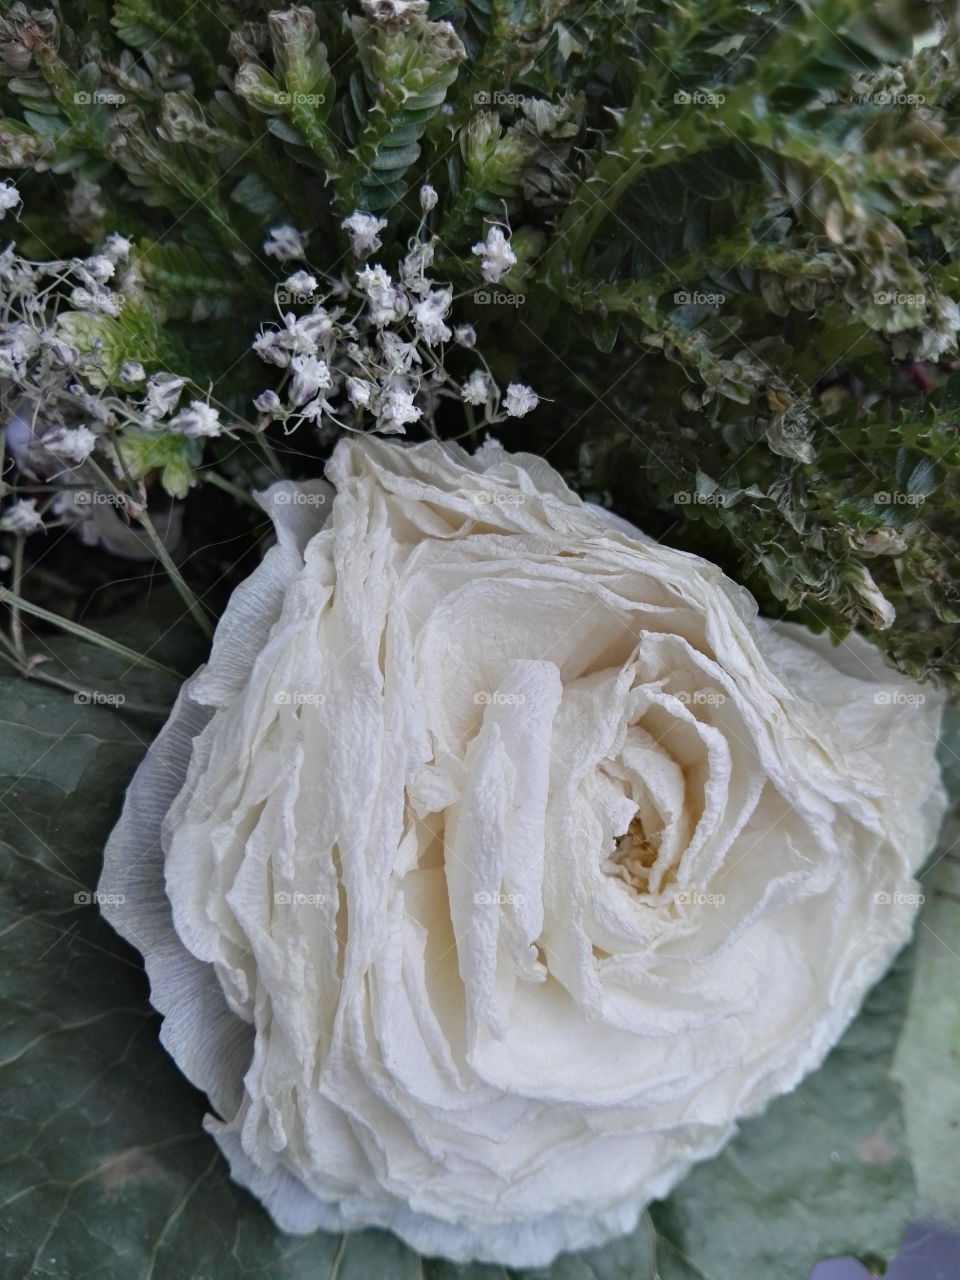 wizened white rose